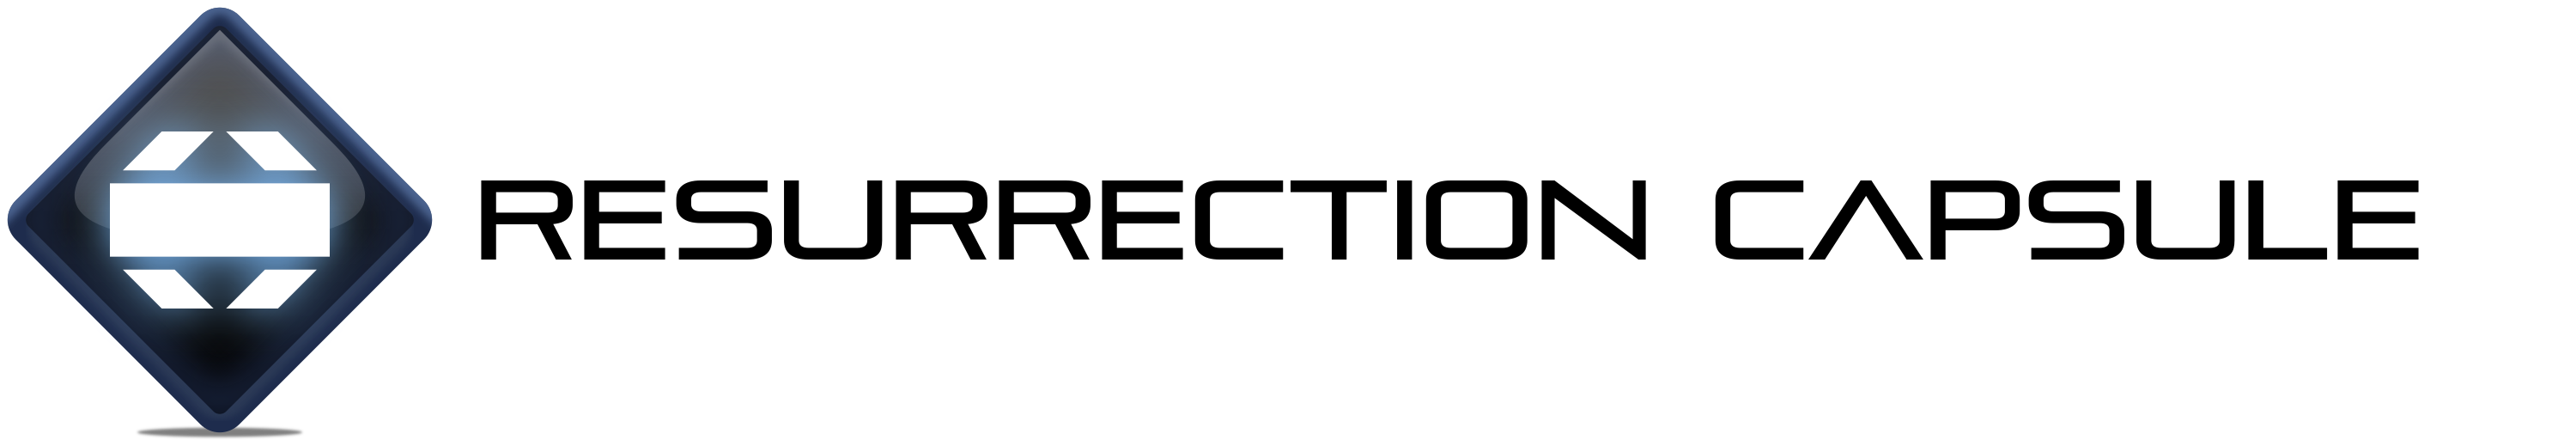 alt ReCap logo and title